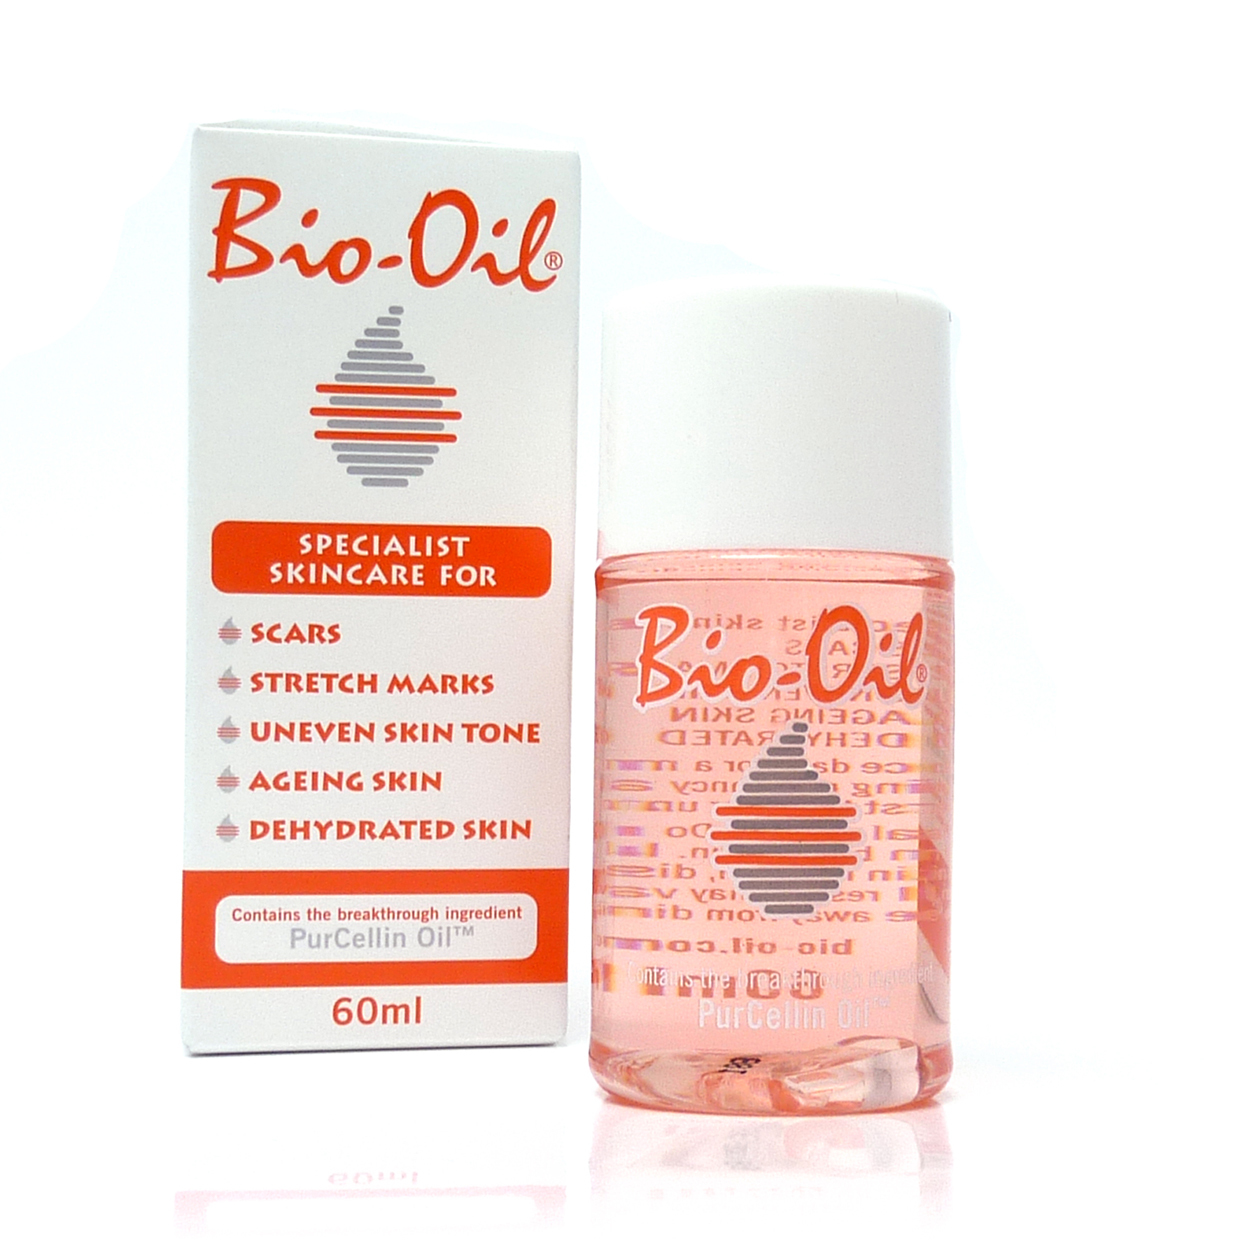 Bio-oil for scars